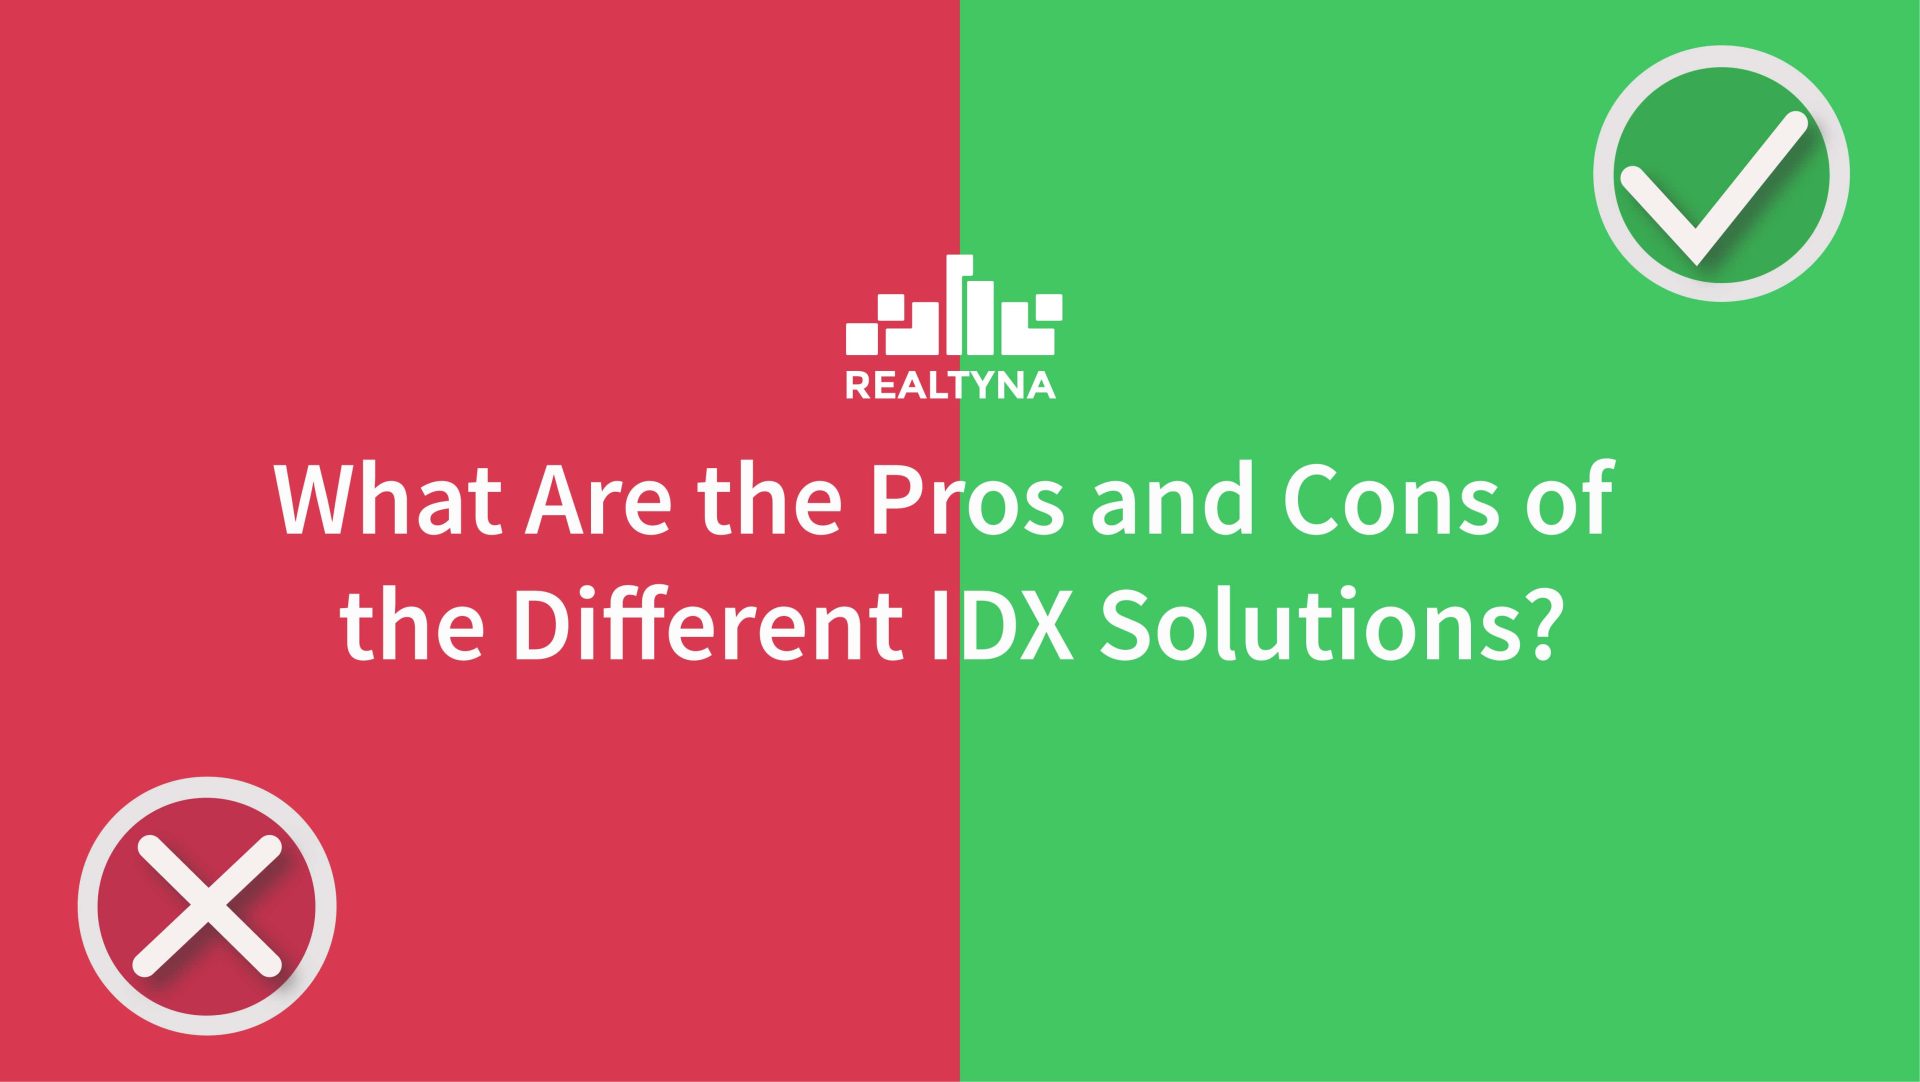 IDX Solutions